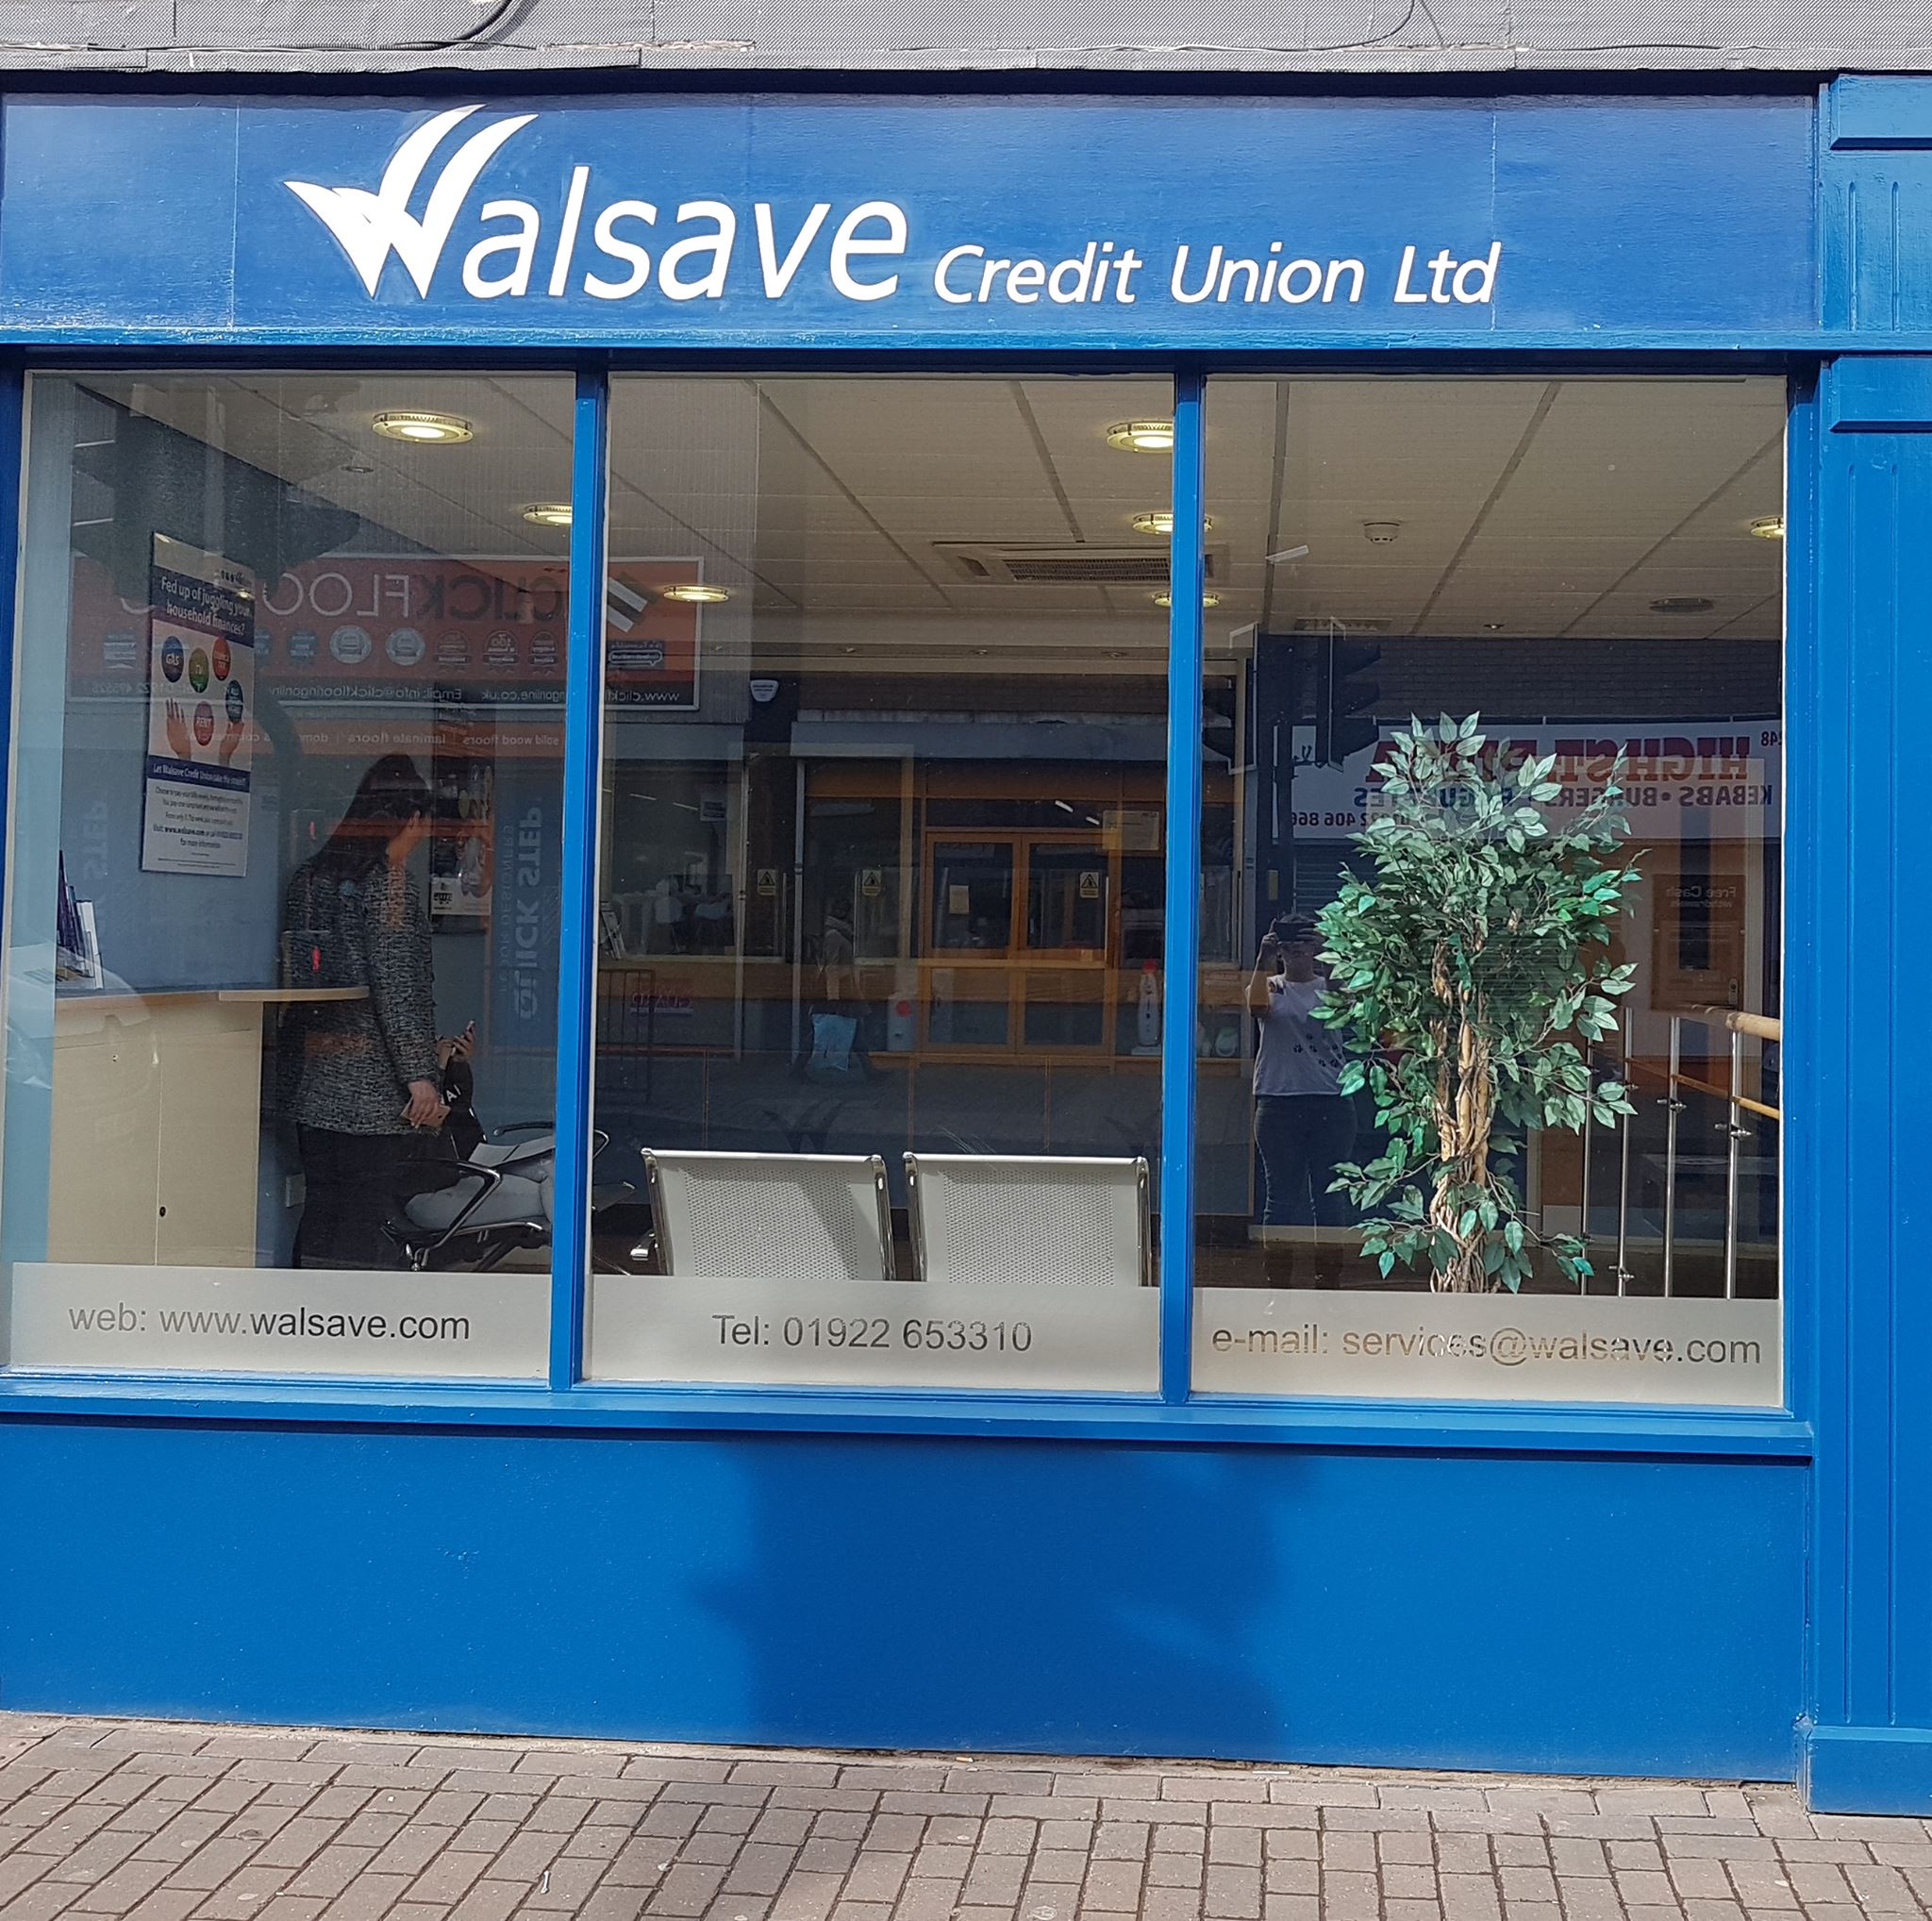 Walsave Credit Union Ltd 02